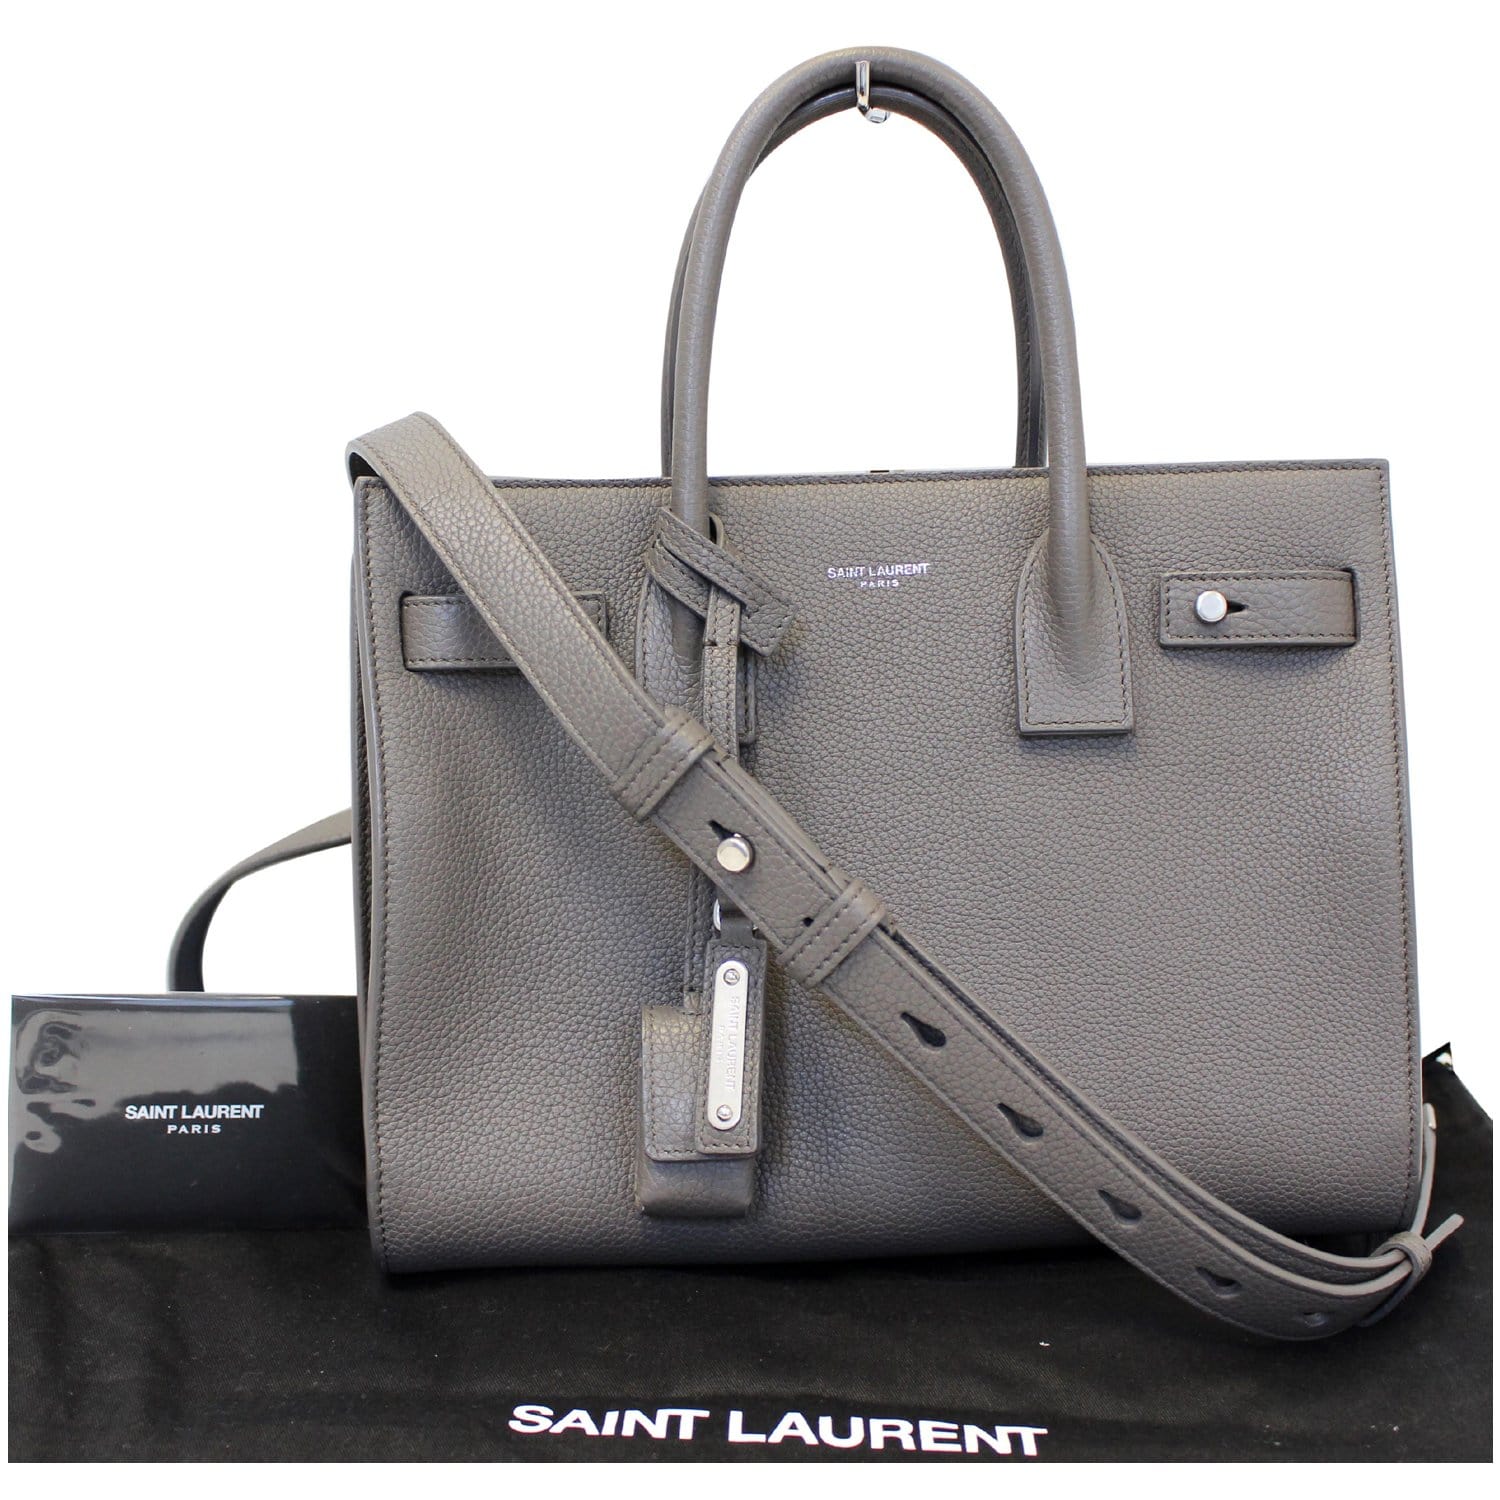 Saint Laurent Sac de Jour Bag in Light Grey Smooth Leather — UFO No More